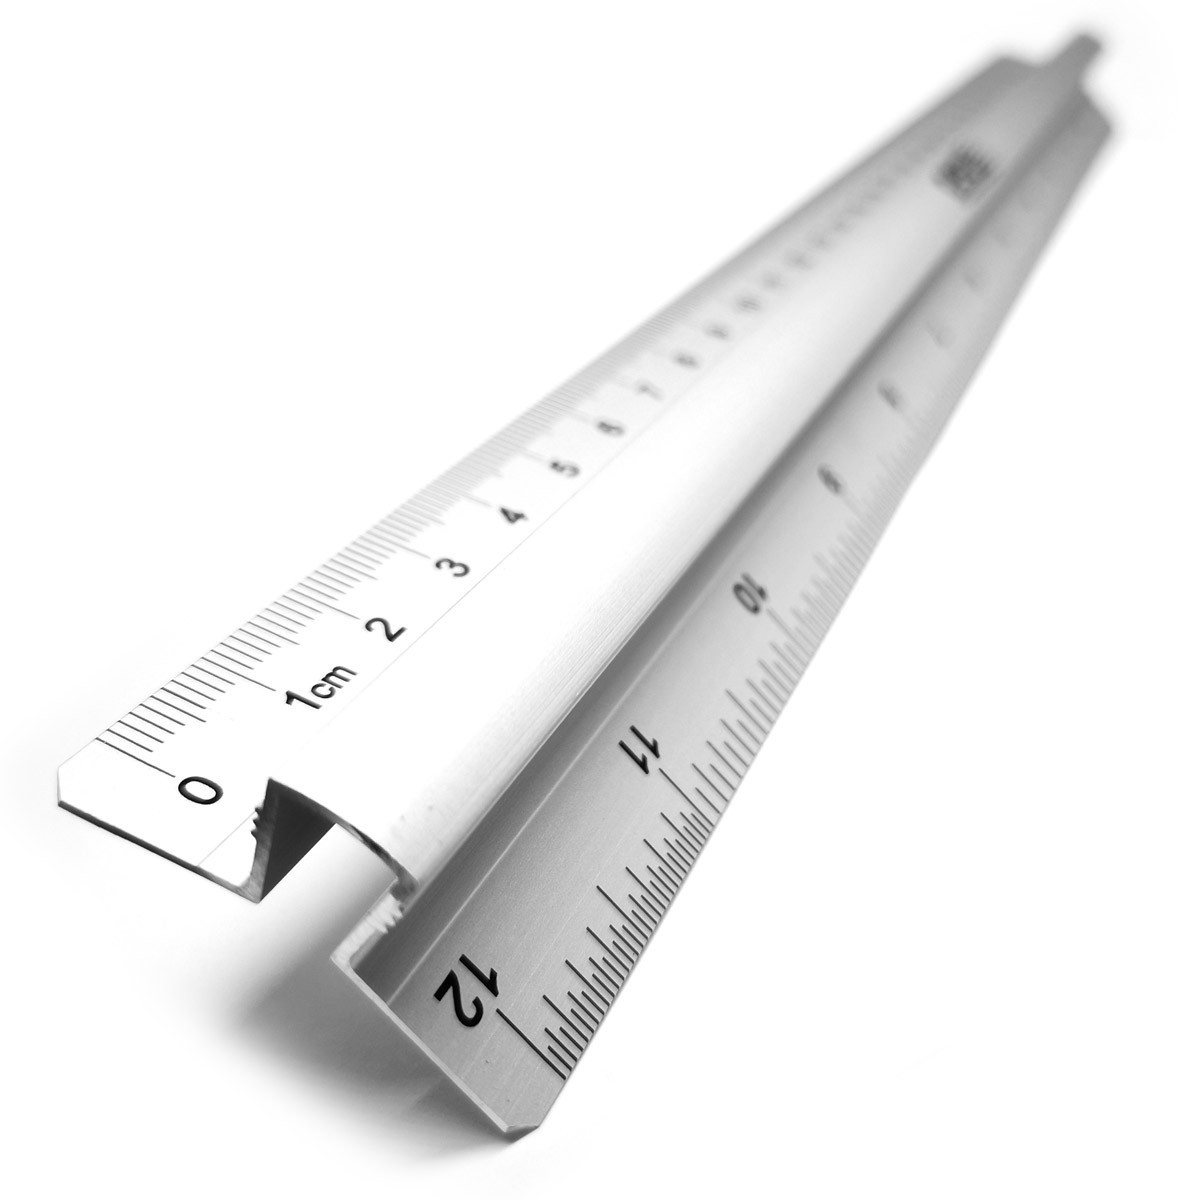 Aluminium advertising ruler with handle